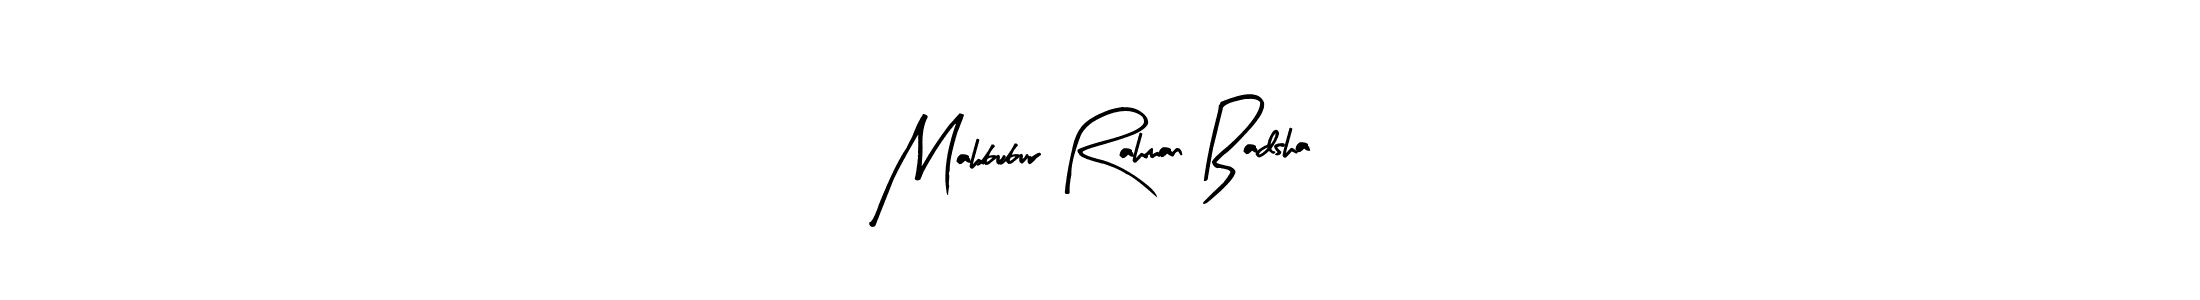 How to Draw Mahbubur Rahman Badsha signature style? Arty Signature is a latest design signature styles for name Mahbubur Rahman Badsha. Mahbubur Rahman Badsha signature style 8 images and pictures png